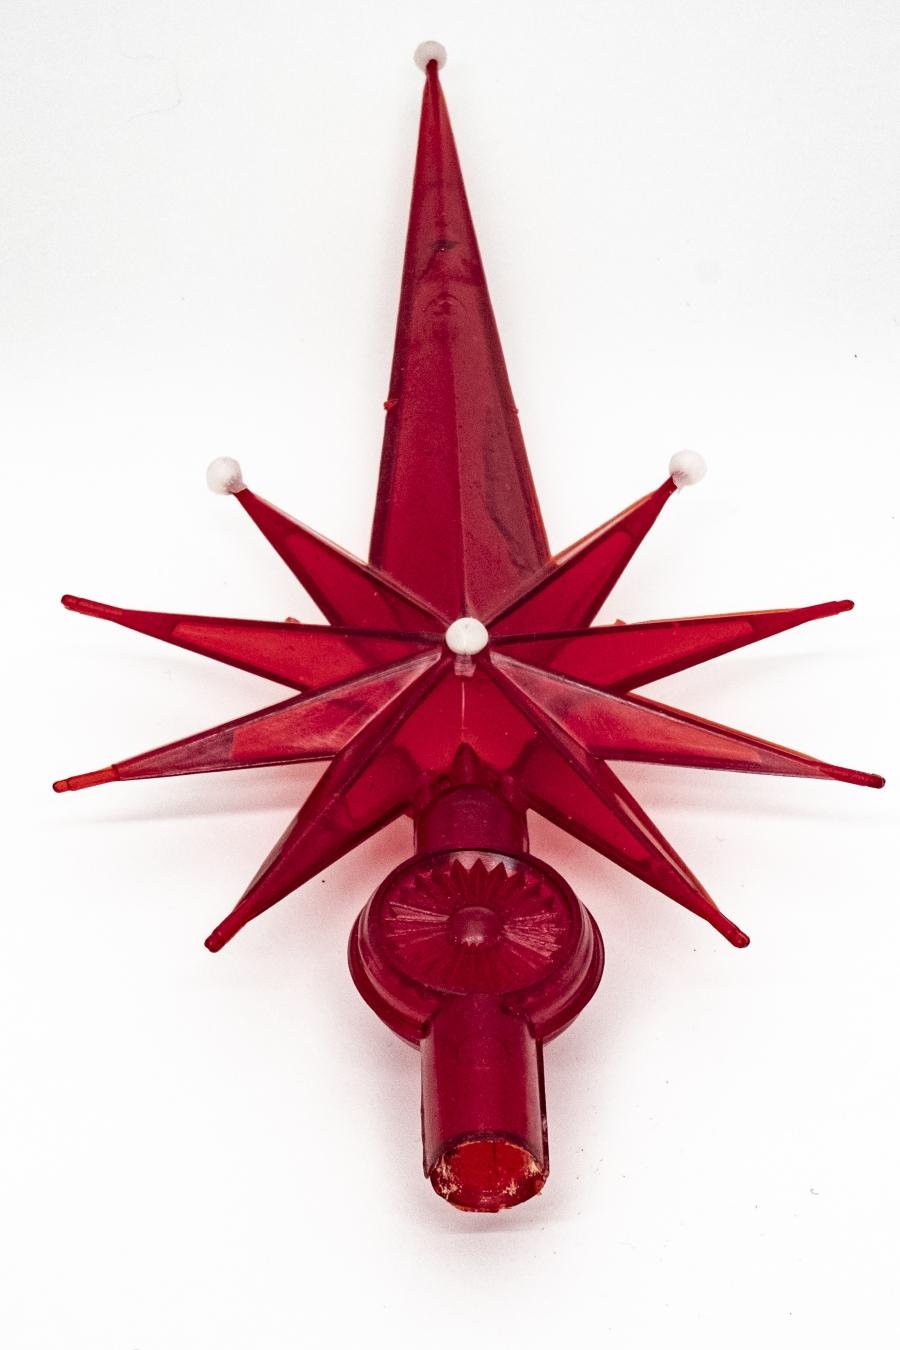 A bright red star ornament